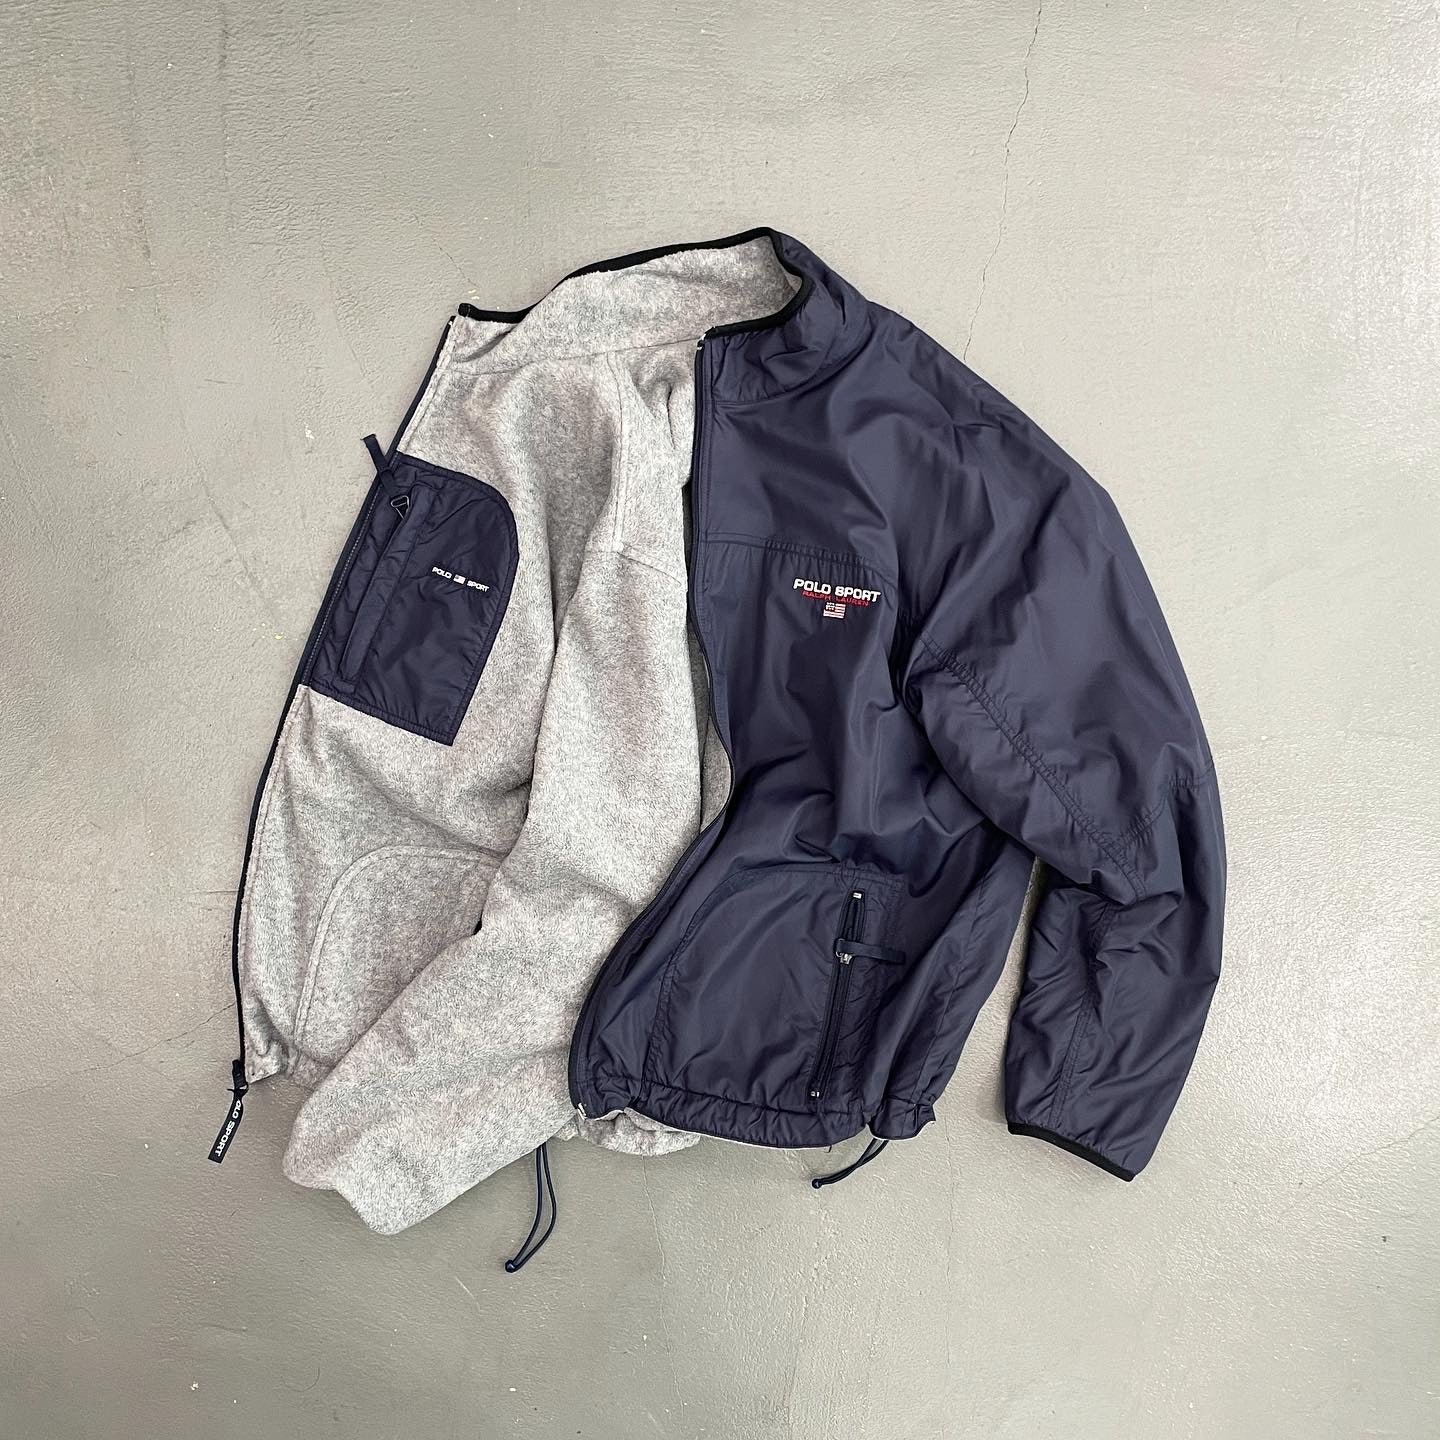 POLO SPORT Reversible Fleece Nylon Zip Jacket